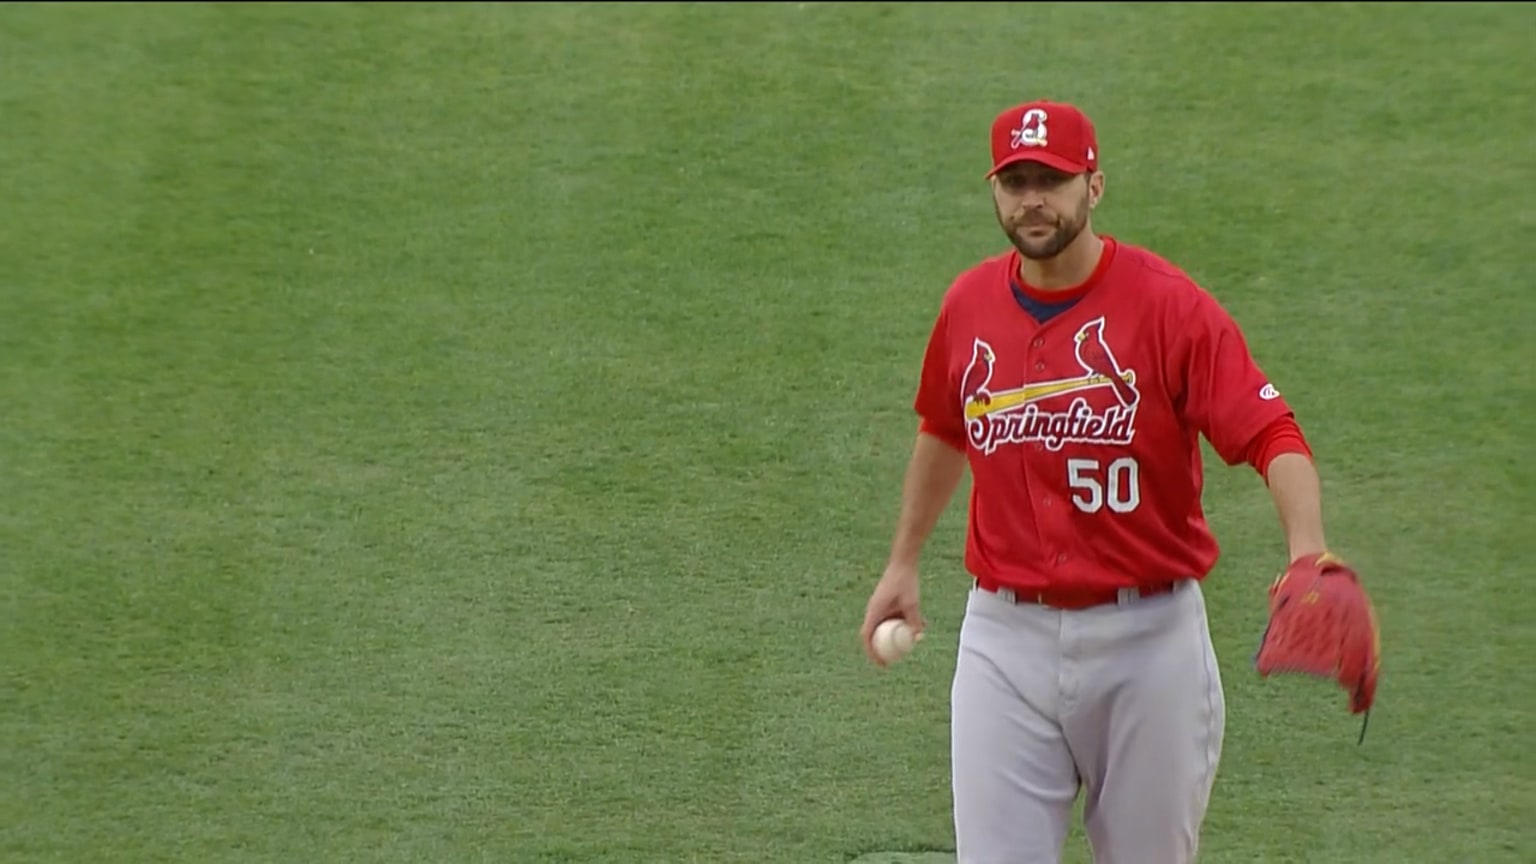 Cardinal pitcher Adam Wainwright makes final appearance in Springfield